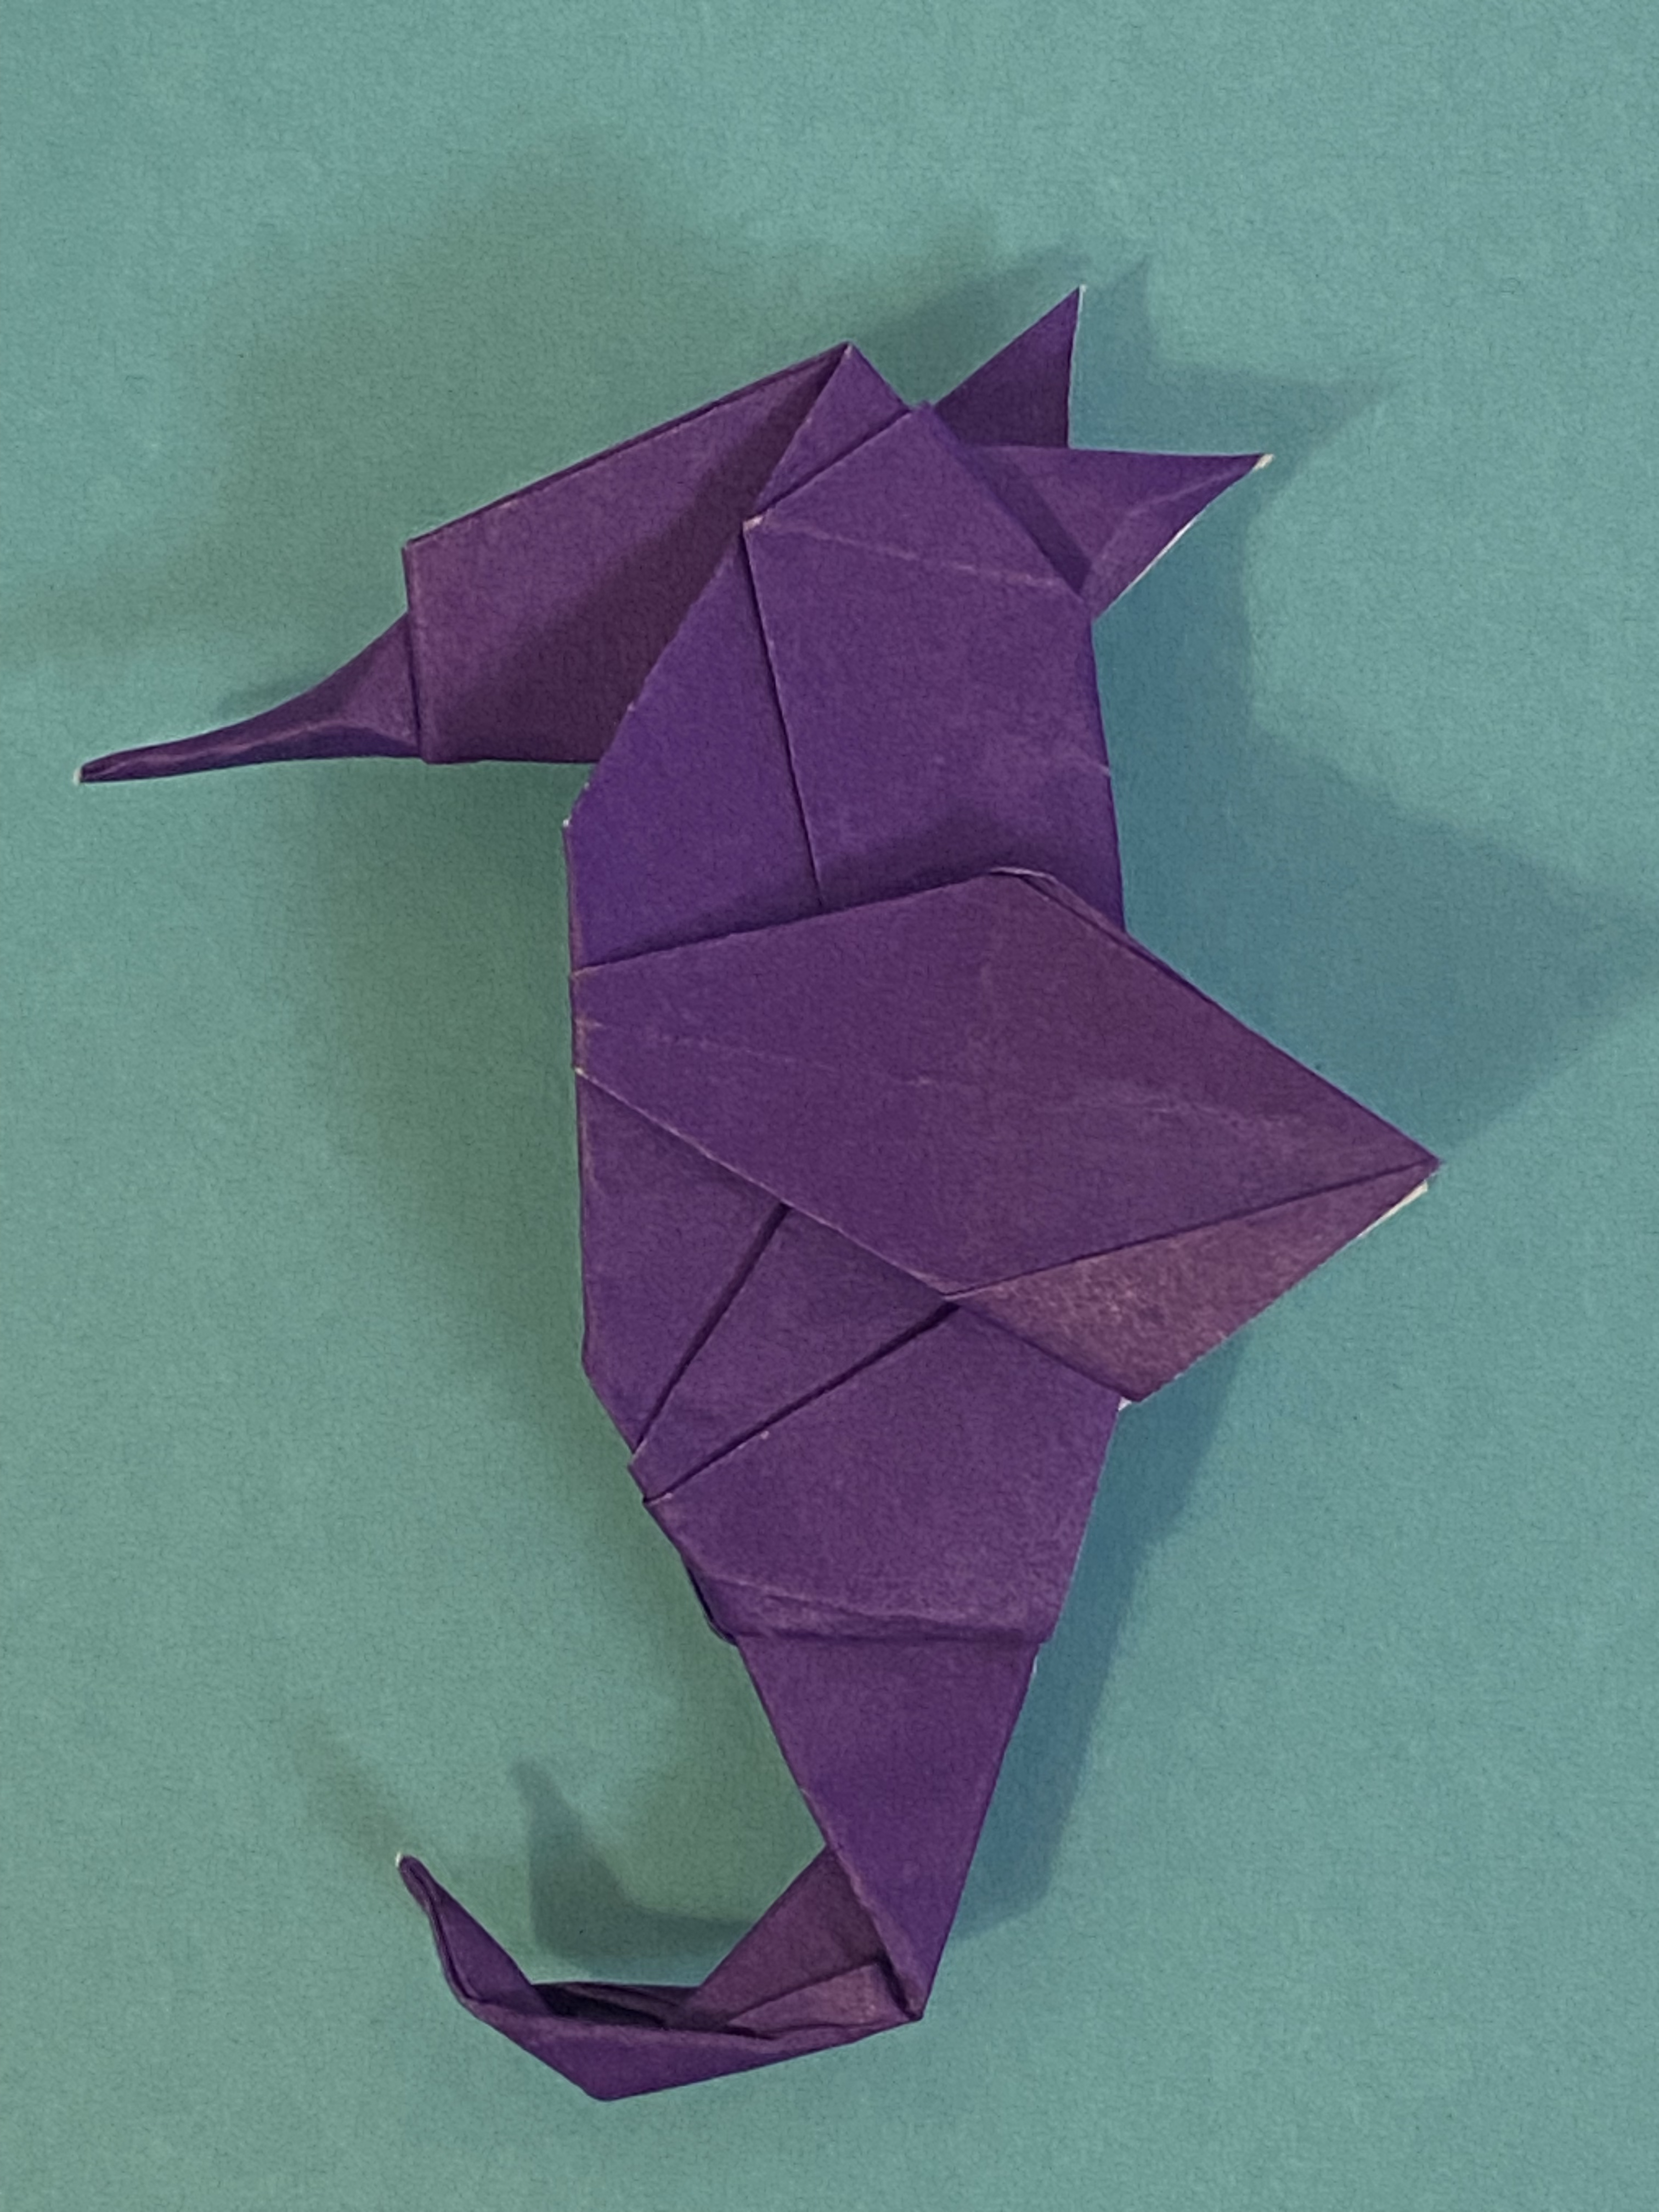 An origami seahorse, designed by Ronik Bhaskar.